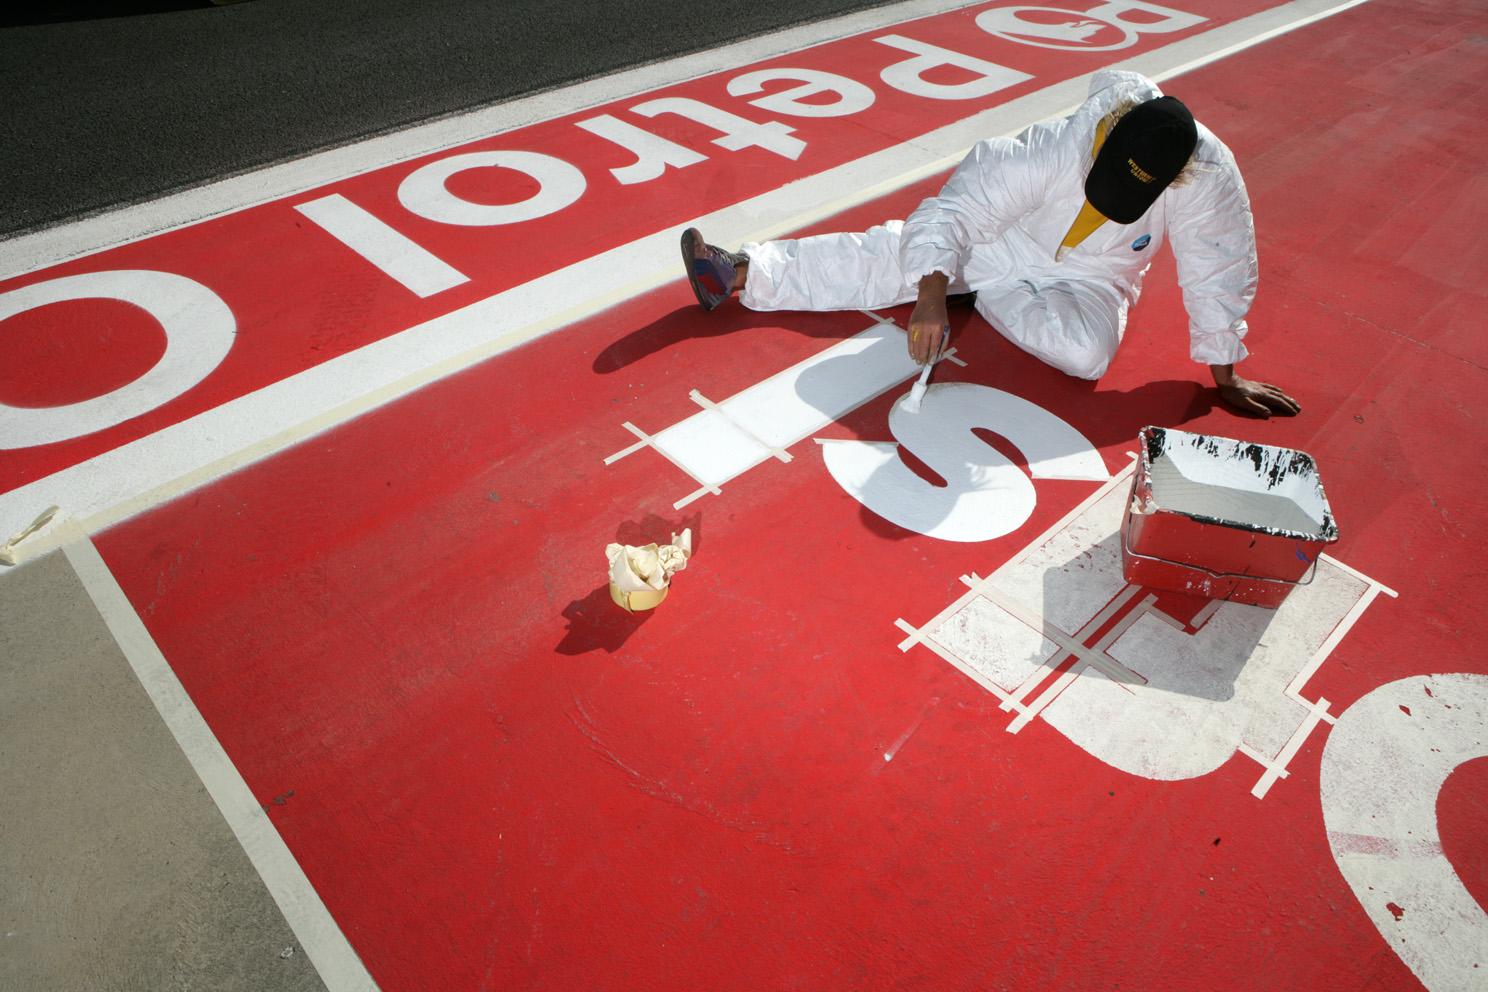 Preparing the track advertising for the Bahrain Grand Prix